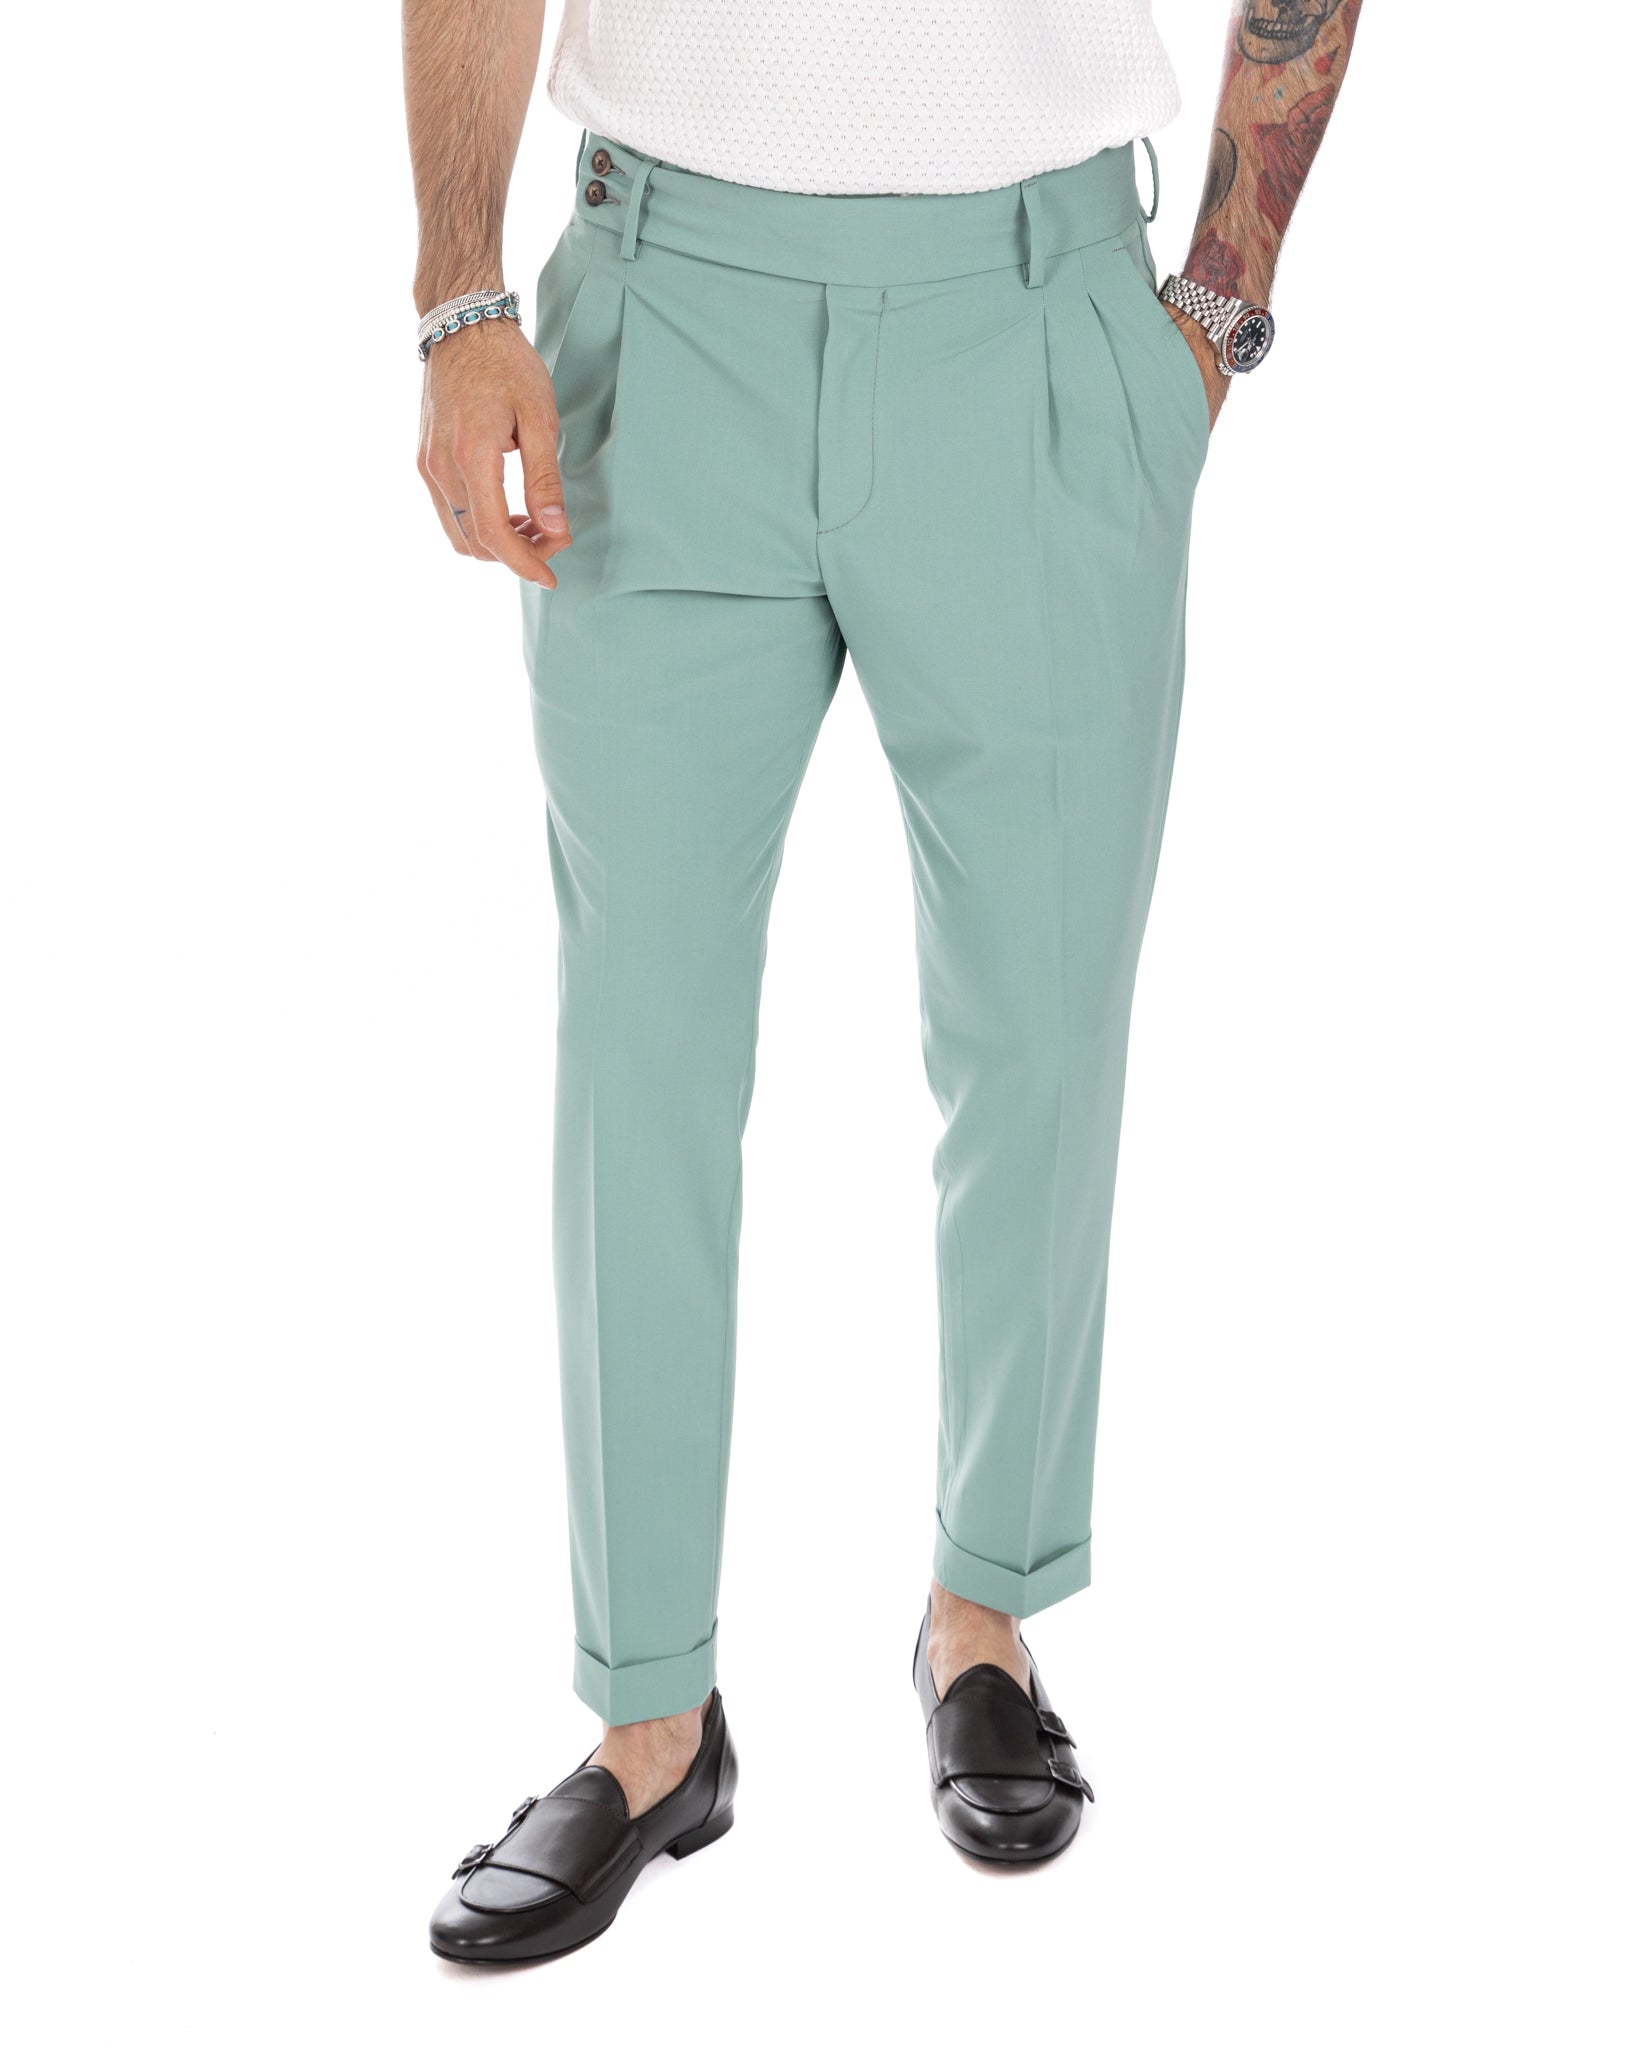 Caprera - green high waisted trousers